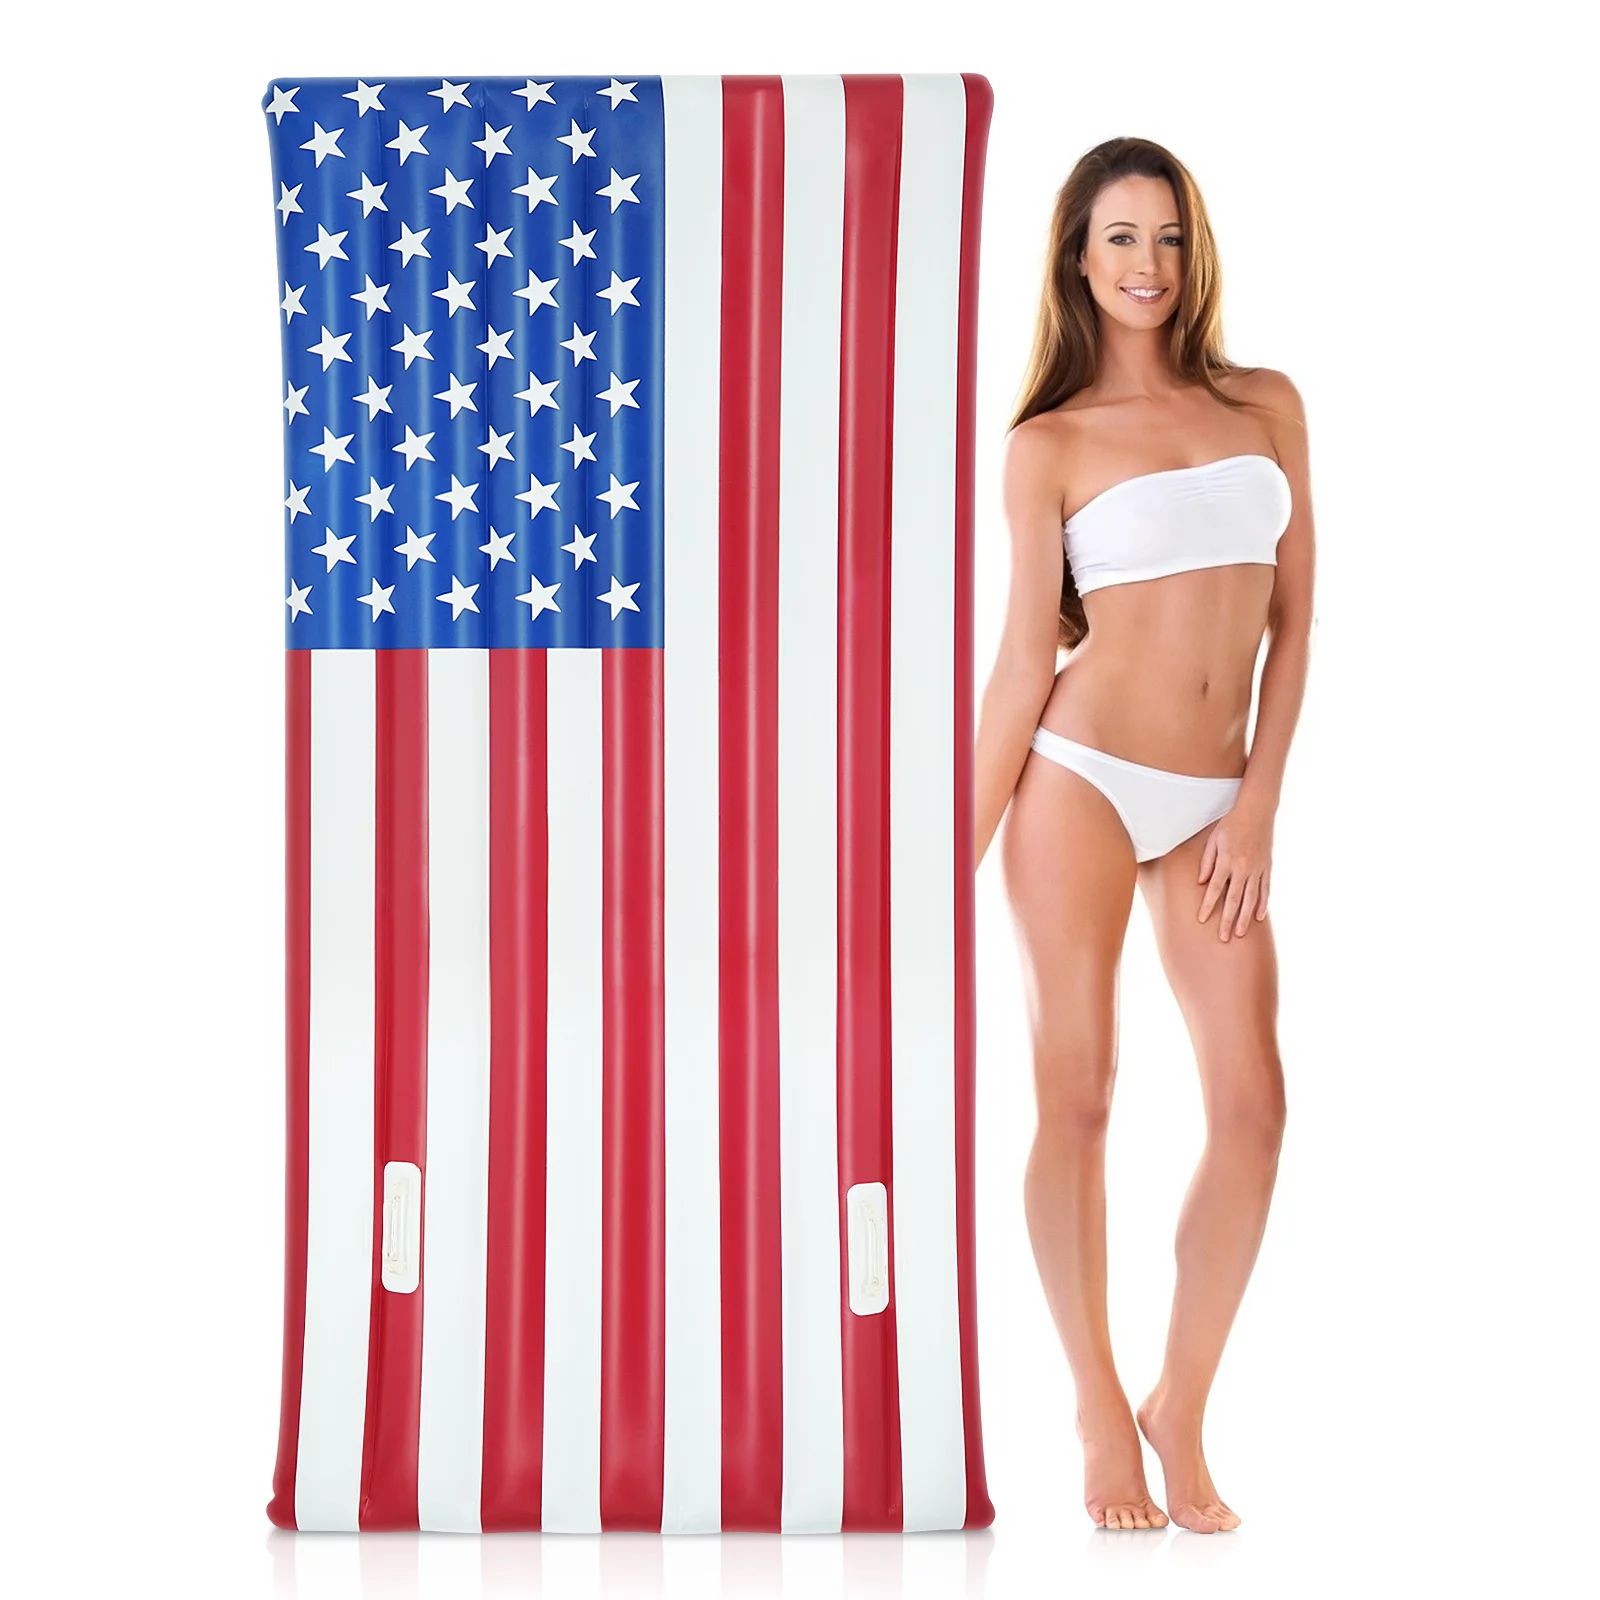 6Ft Inflatable American Flag Pool Floats, Water Fun Floaty, Summer Swim Pool Raft Lounge Beach Fl... | Walmart (US)